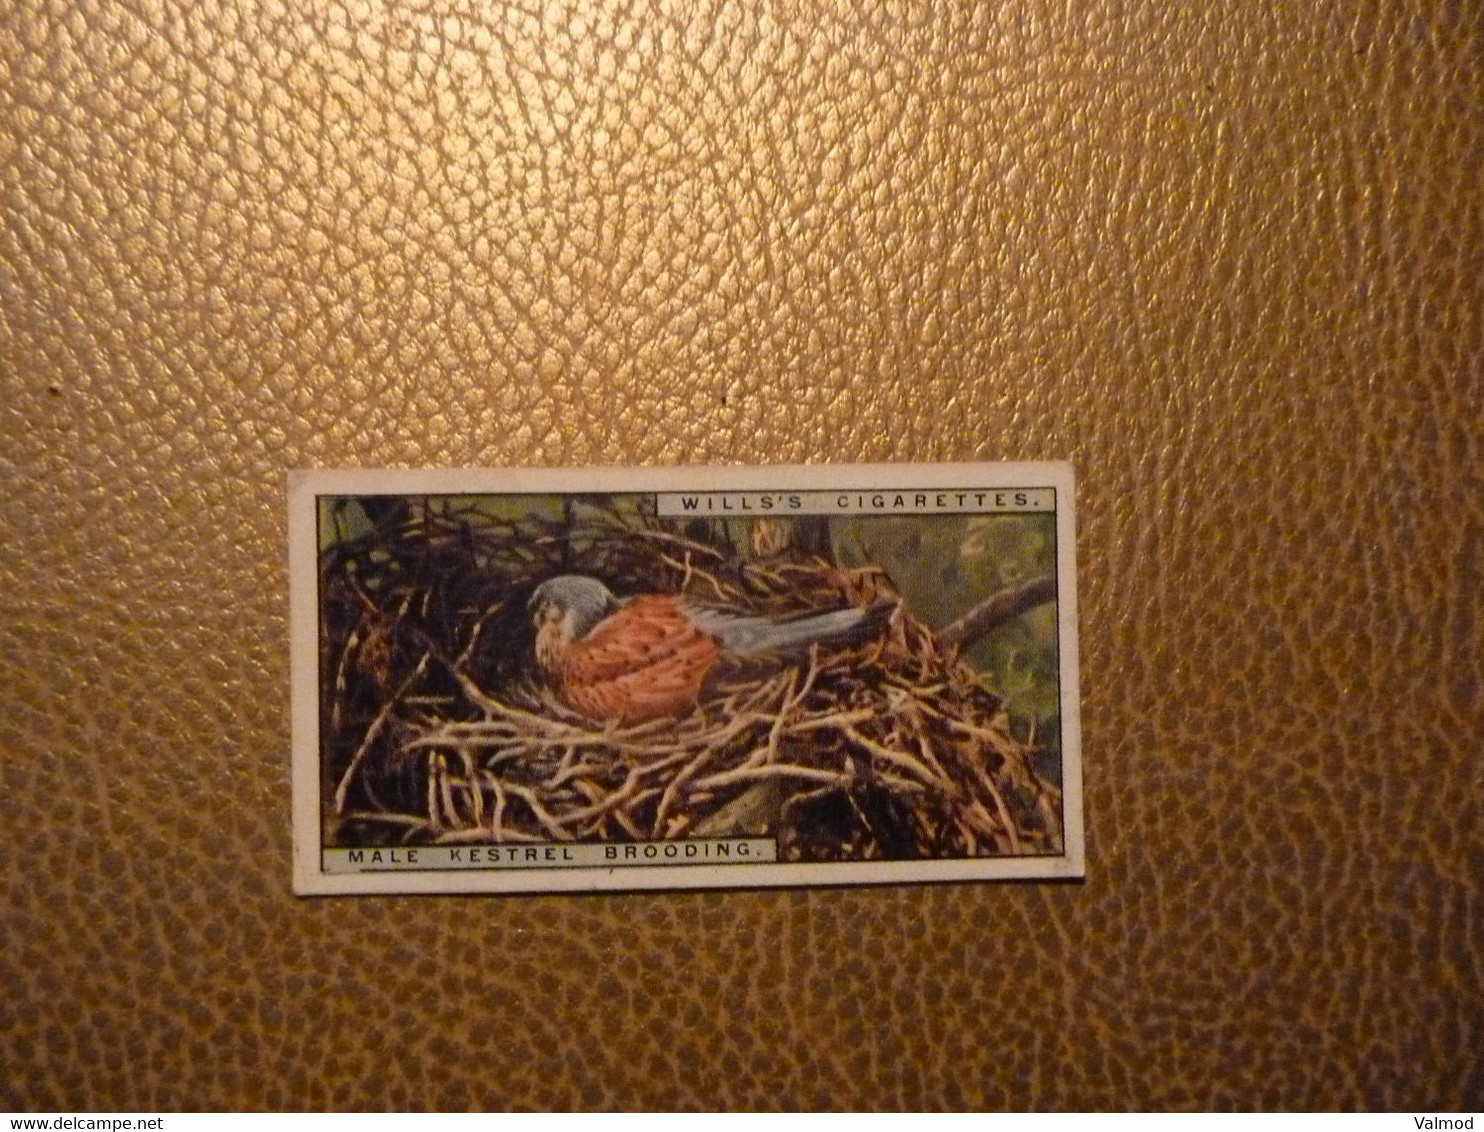 Lot de 34 Chromos Will's Cigarettes - Life in the Tree Tops  (Voir Photos) - Format 3,5 cm x 6,5 cm environ.